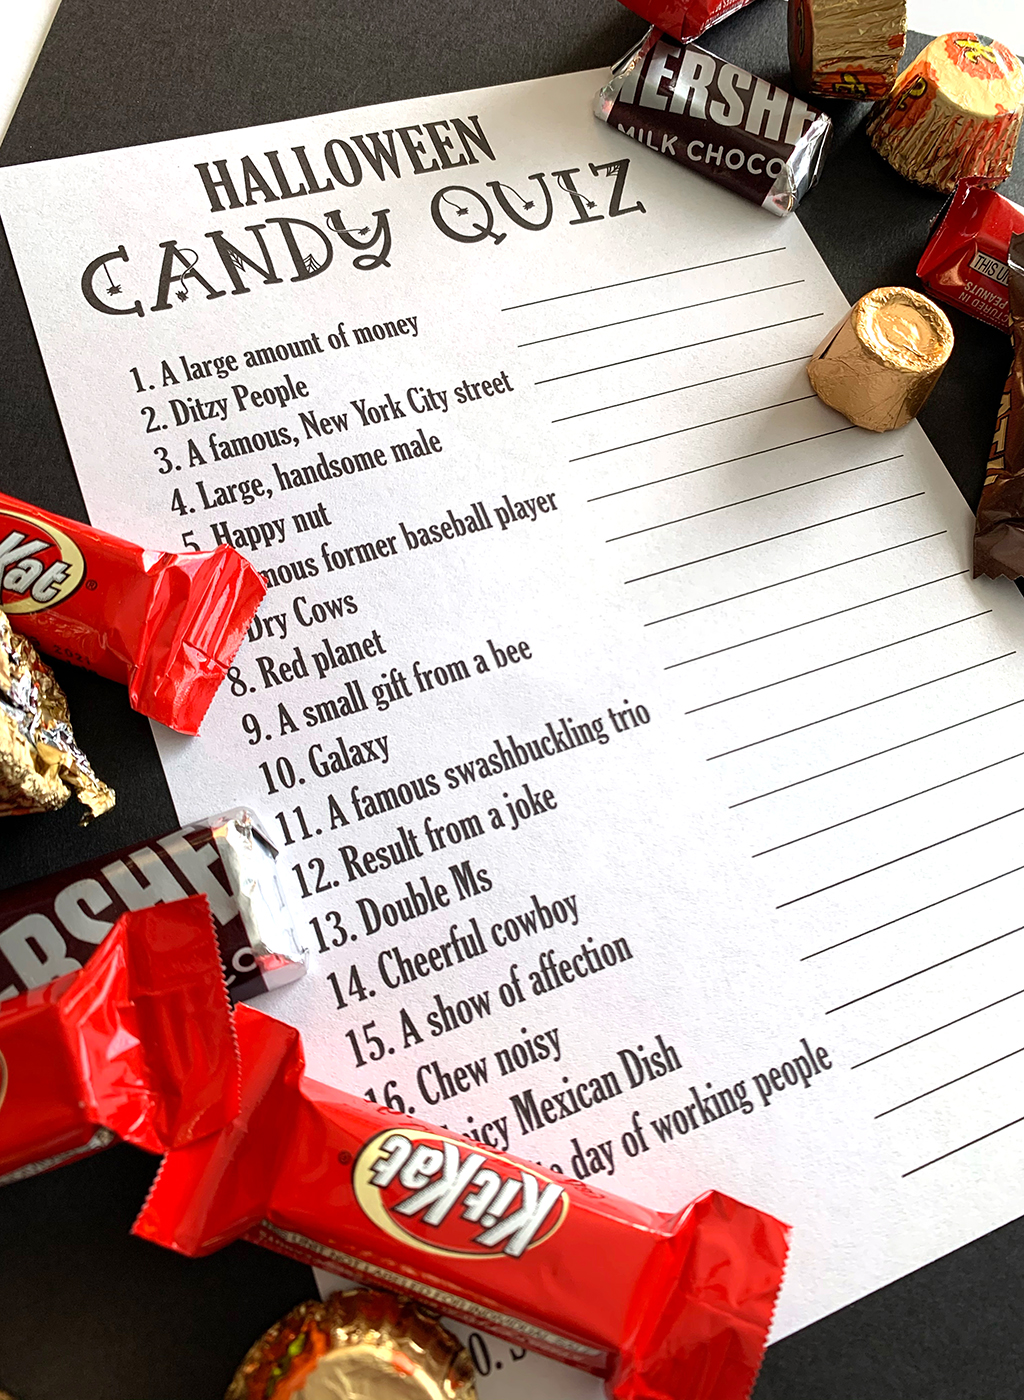 Candy Quiz Halloween Game